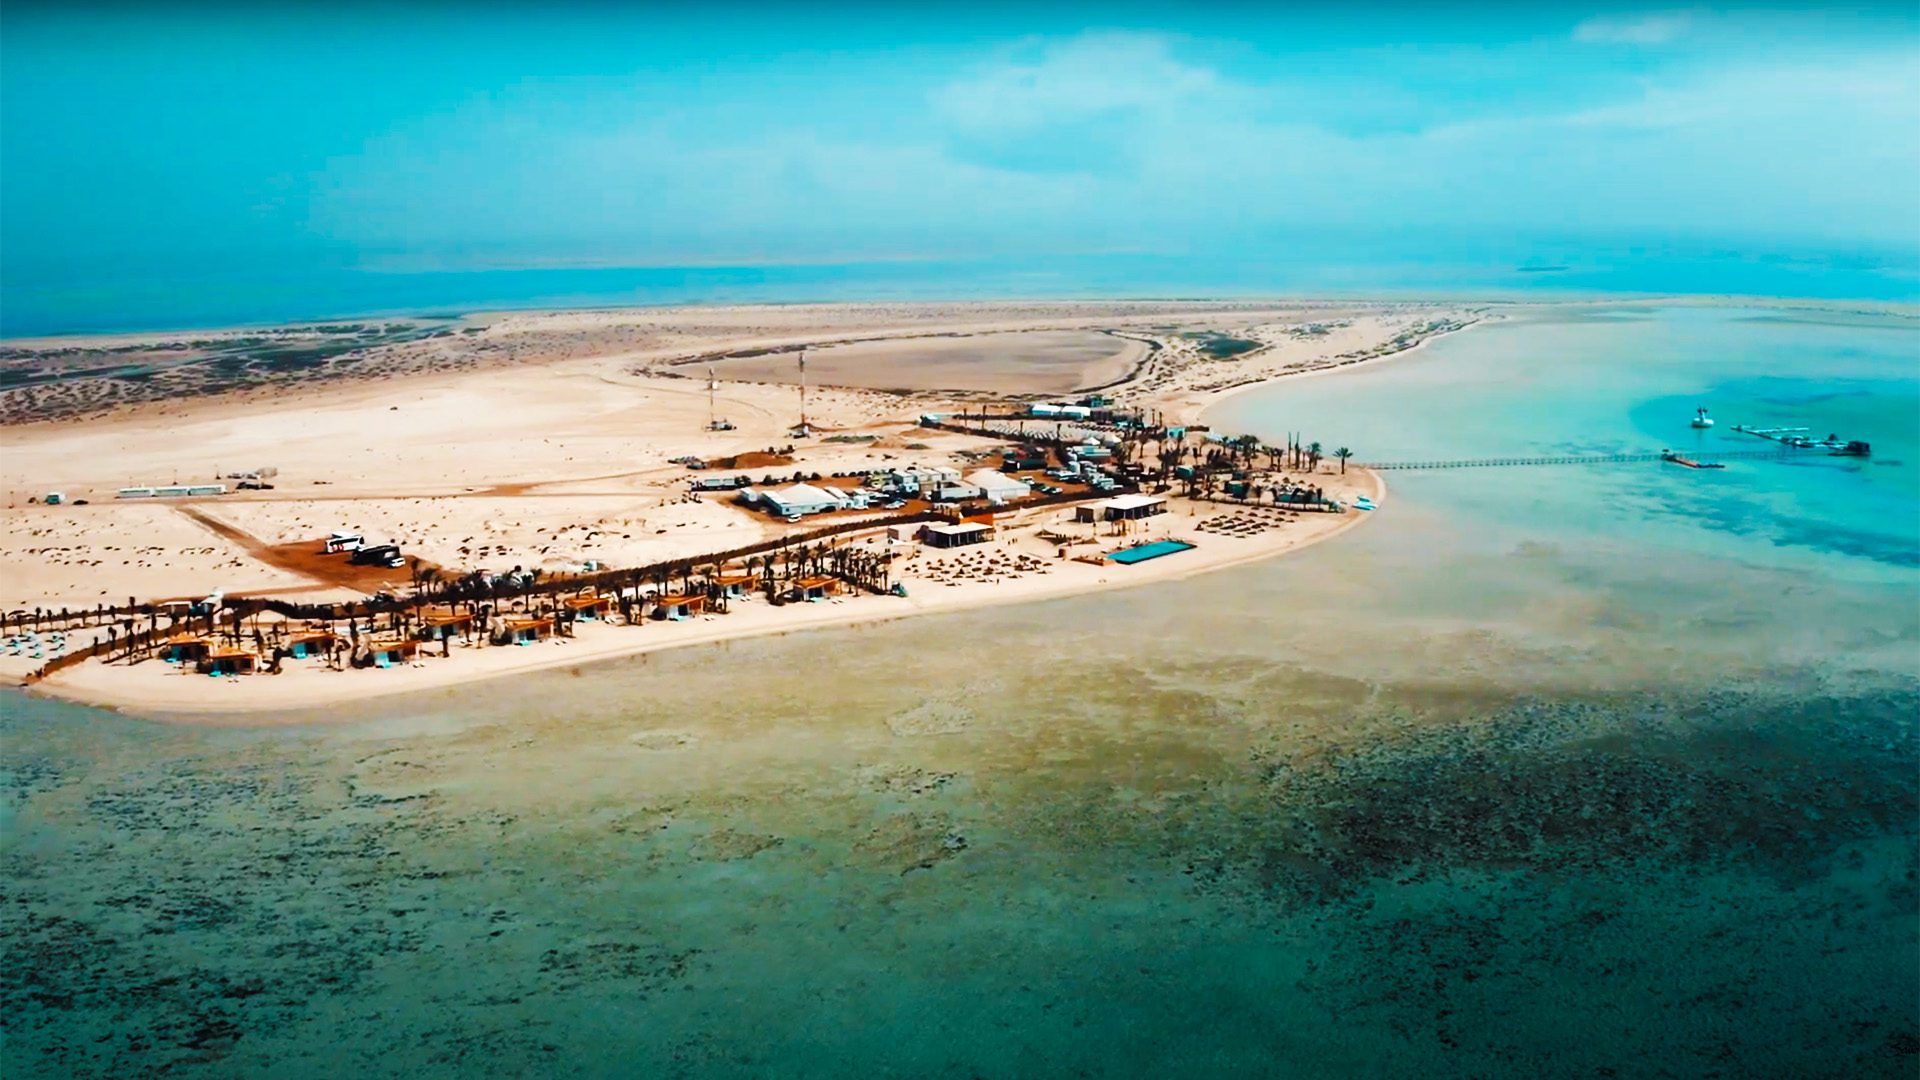 Red Sea & Saudi Arabia, The Next Buzzing Cruise Destination